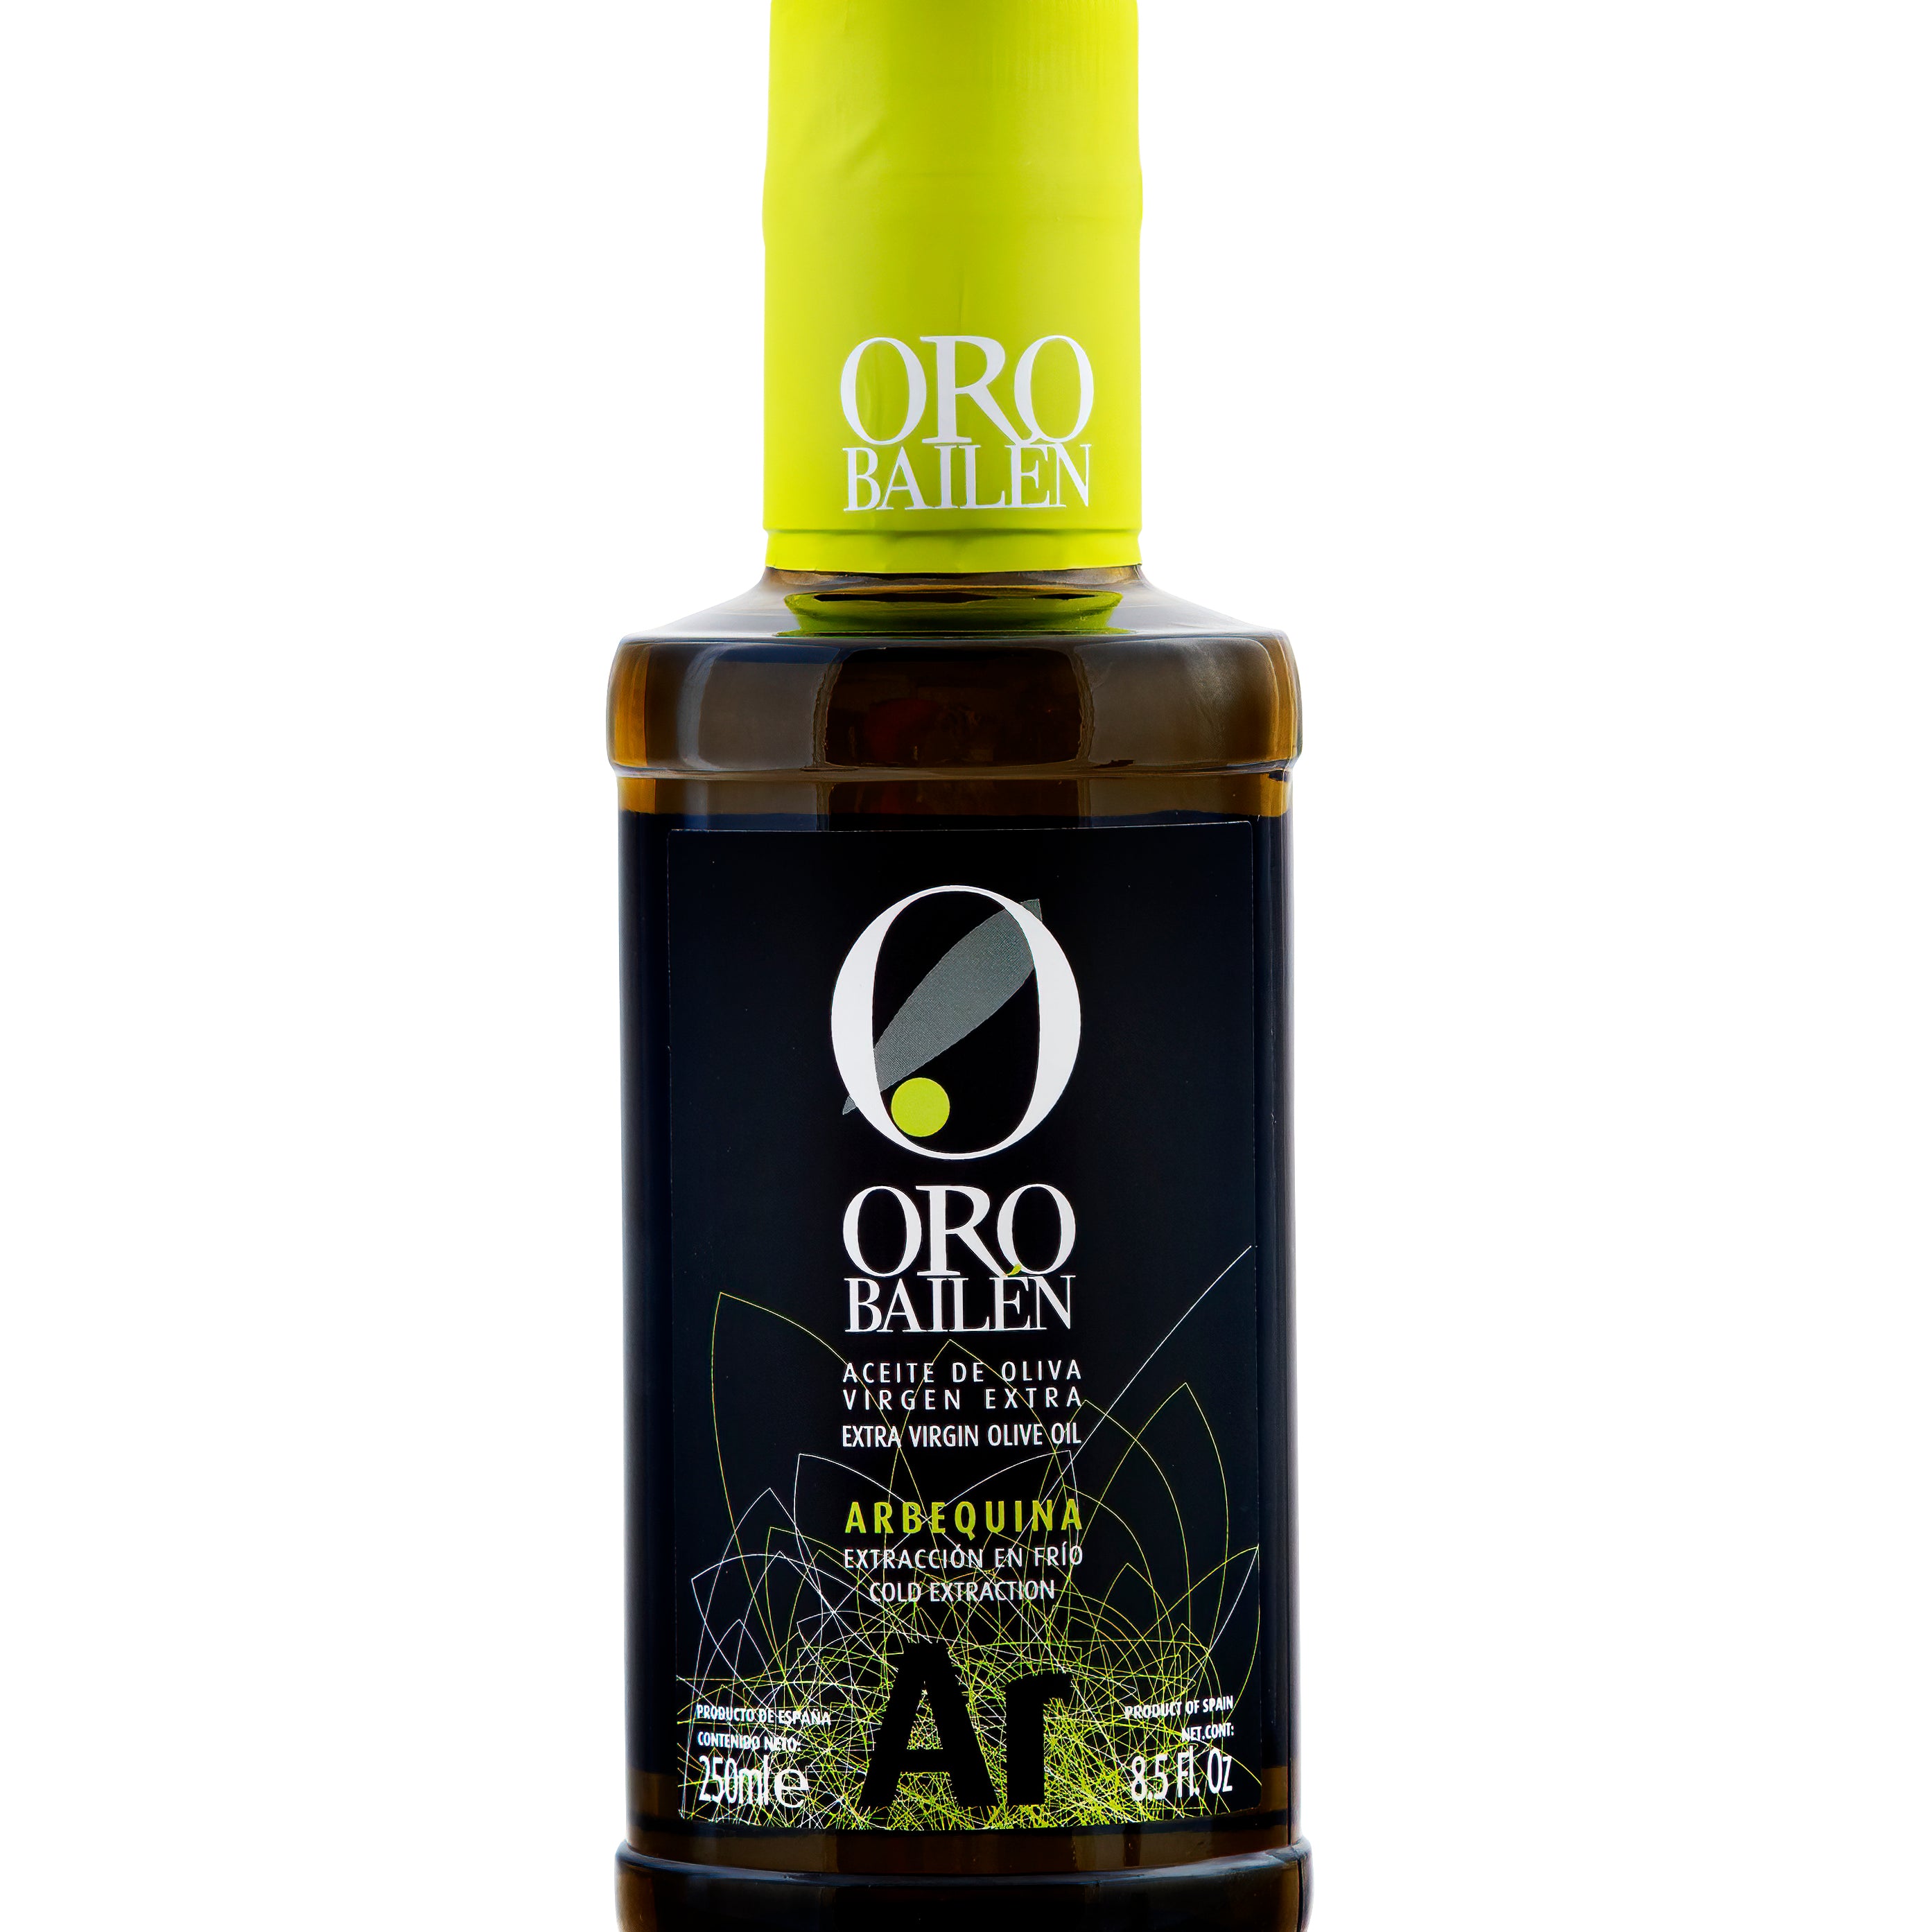 Oro Bailen Arbequina Extra Virgin Olive Oil 250ml buy the best Spanish olive oil online